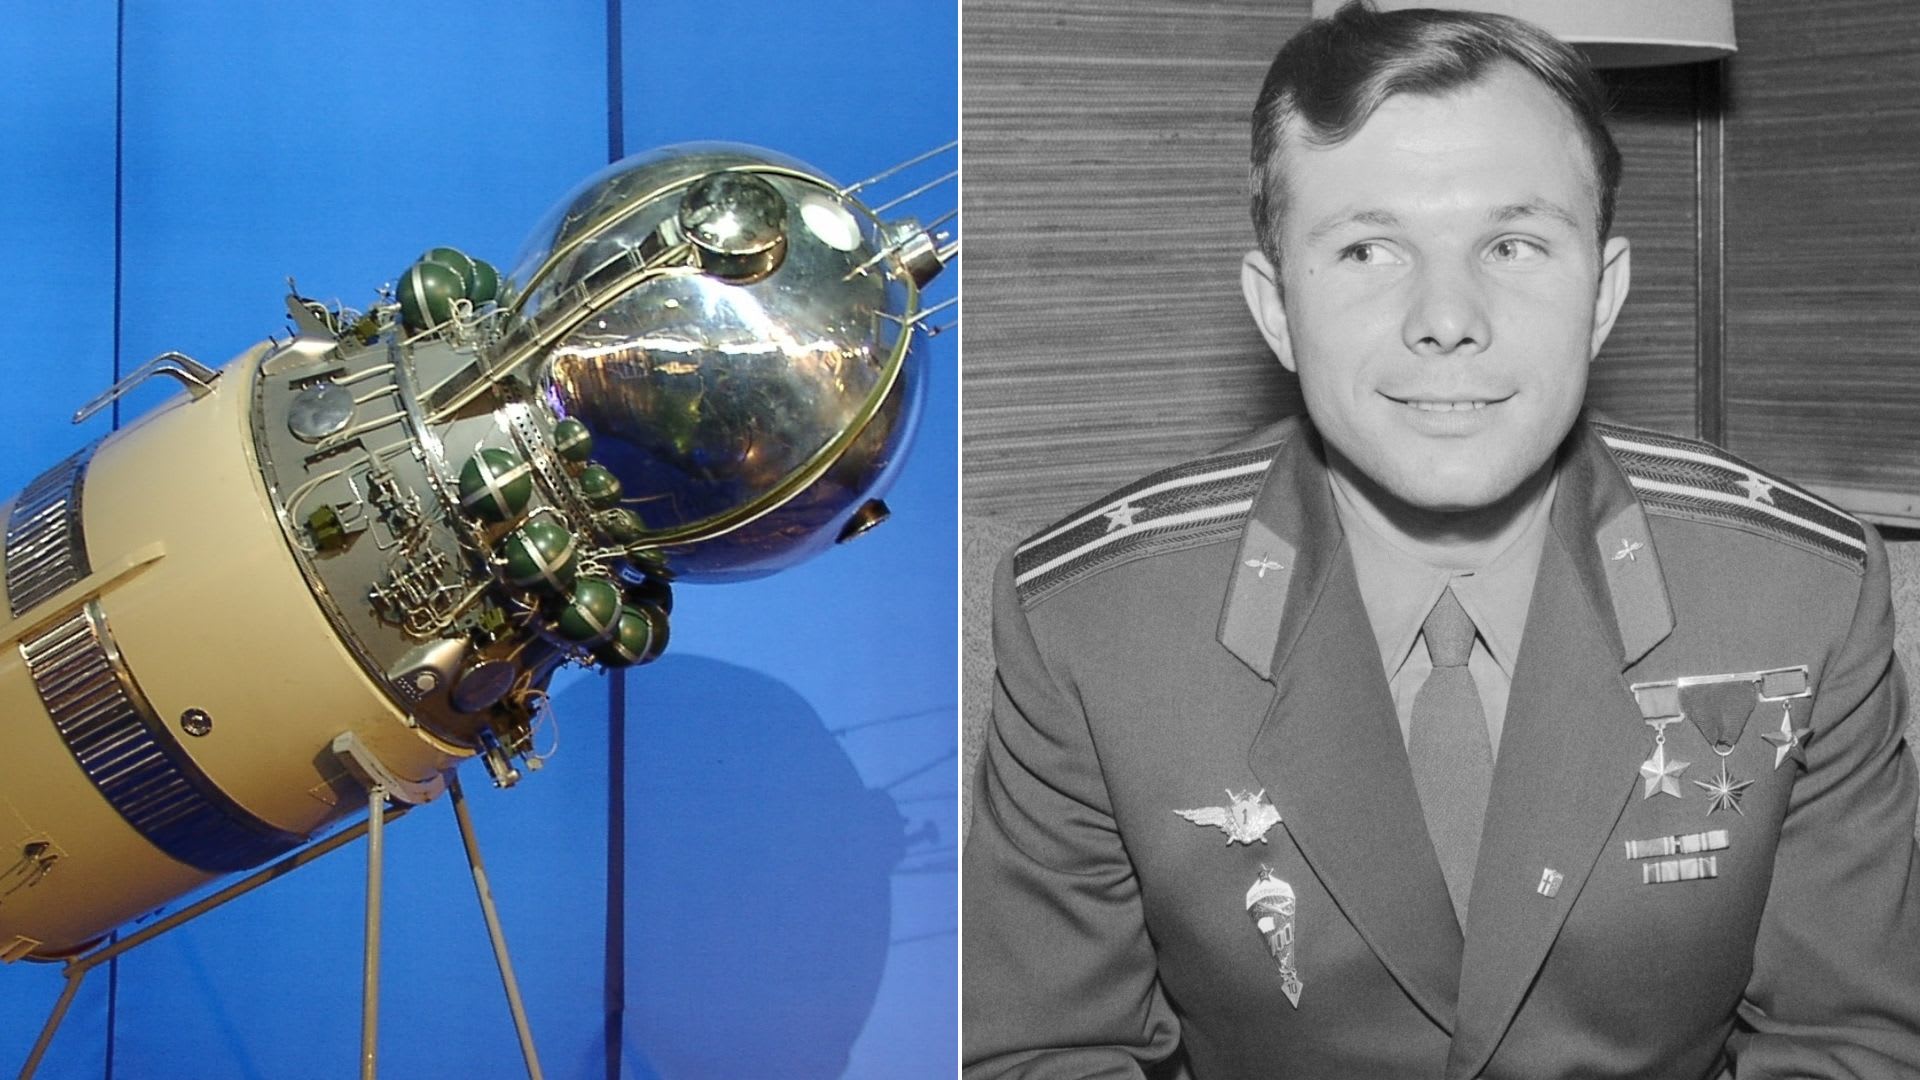 Model Vostoku 1 a Jurij Gagarin